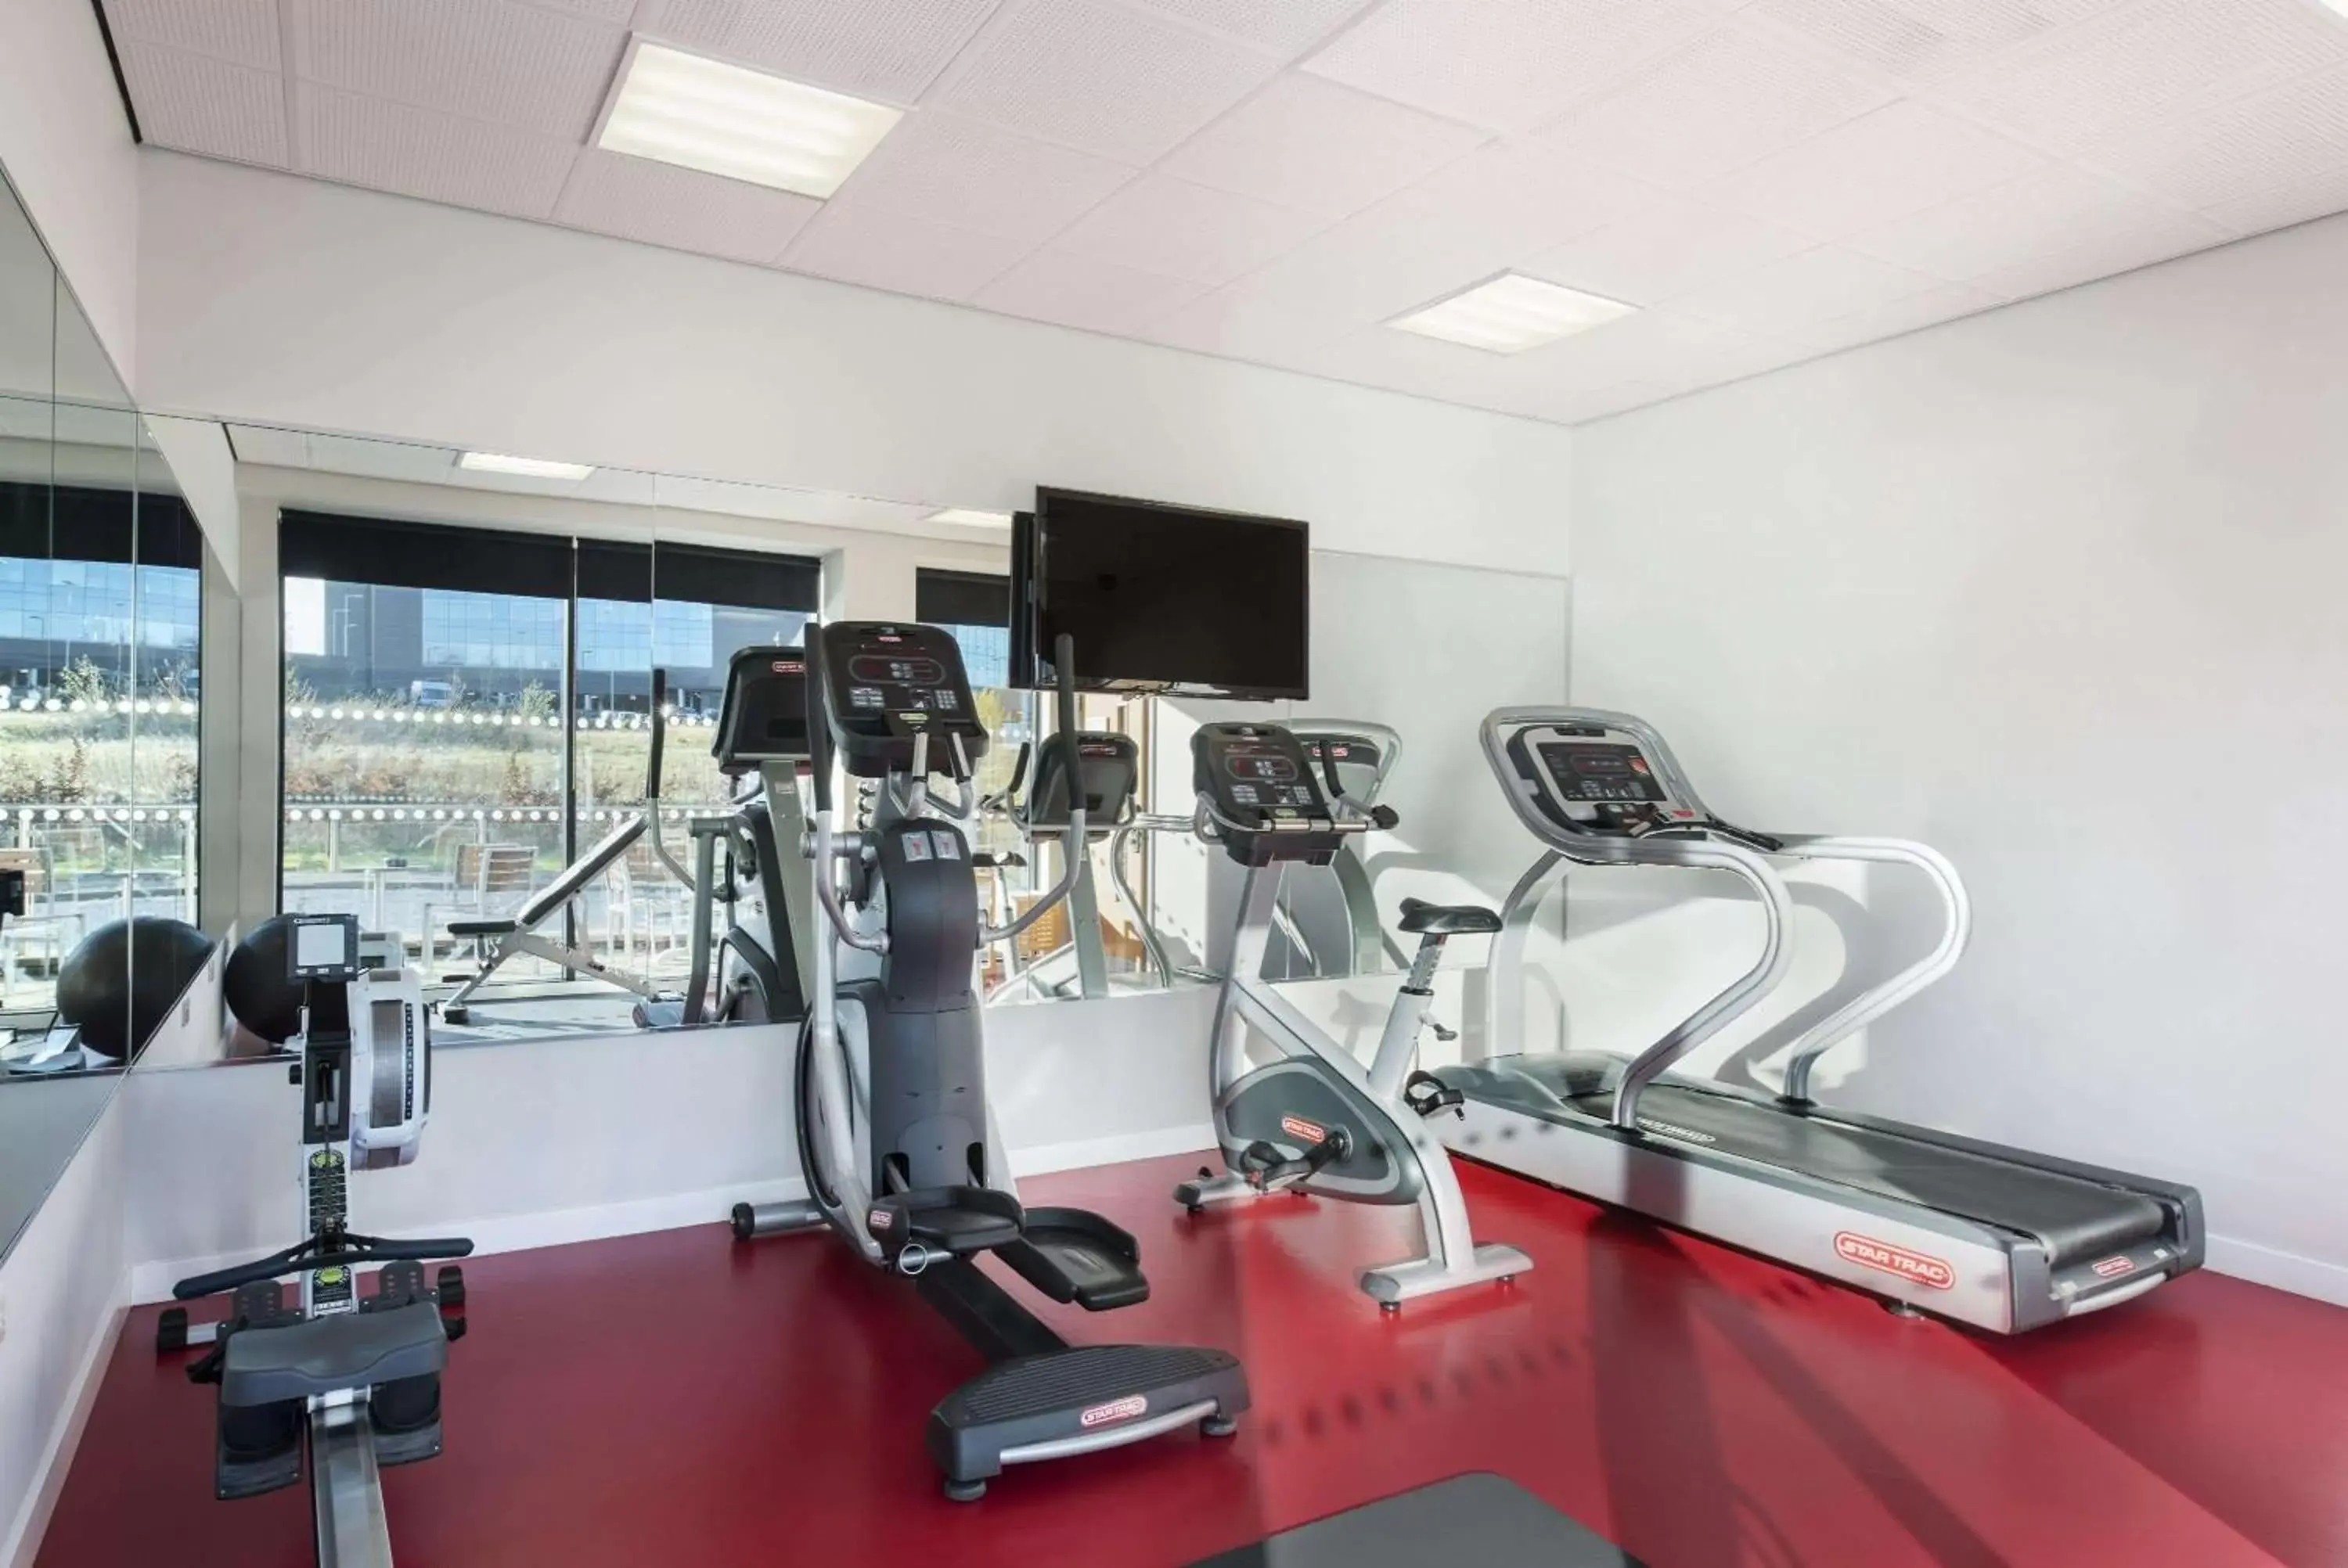 Fitness centre/facilities, Fitness Center/Facilities in Ramada Encore Newcastle-Gateshead